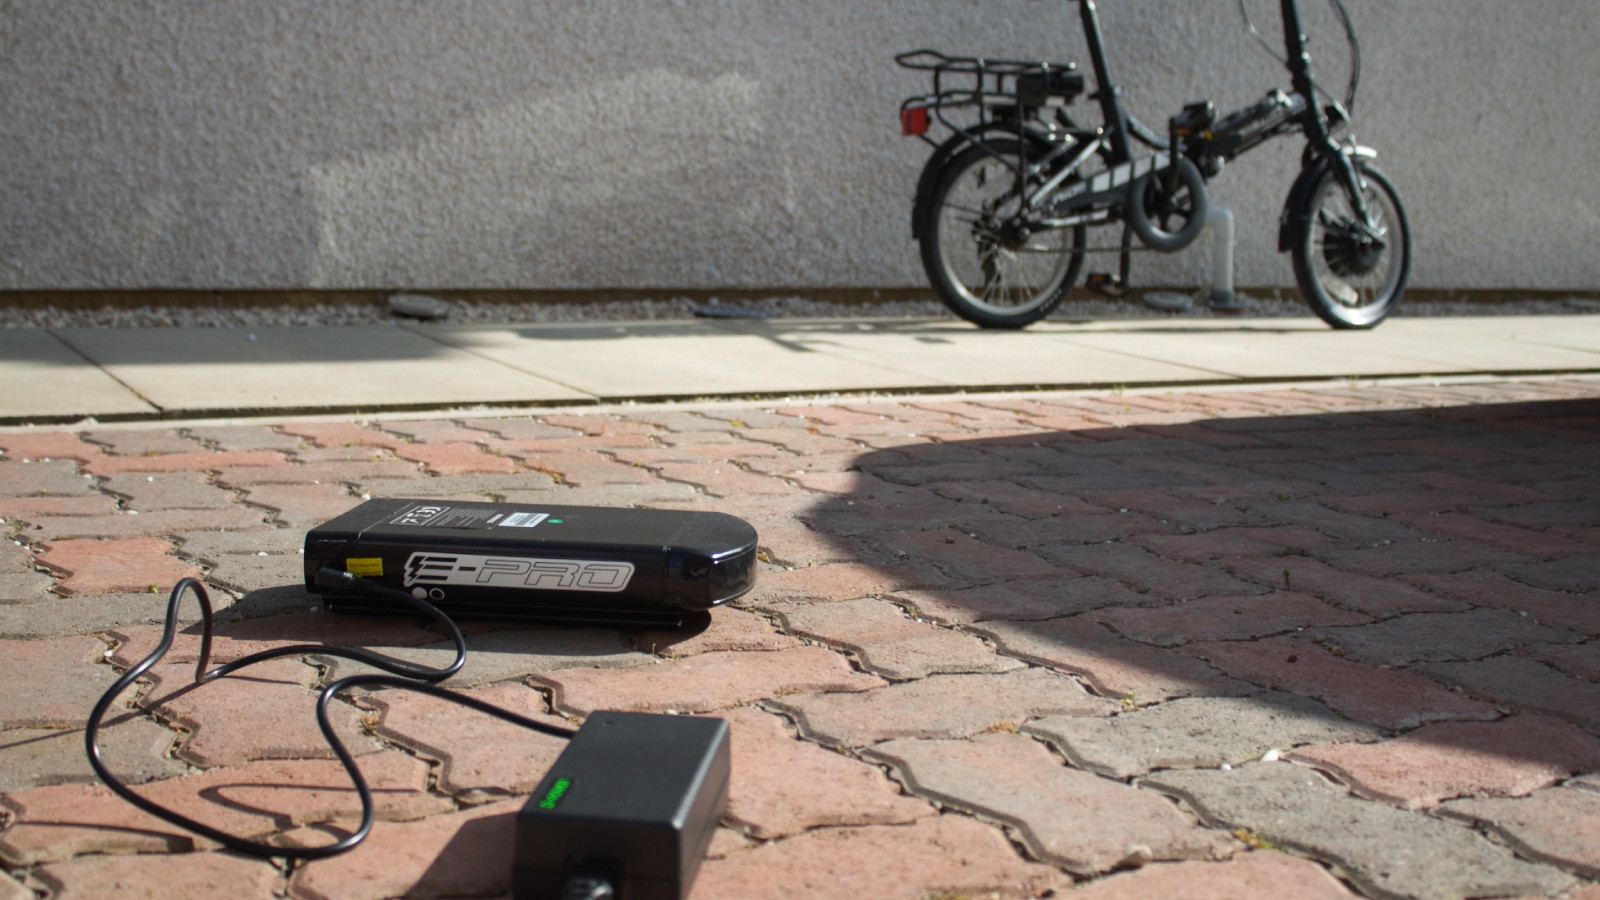 E-bike charger